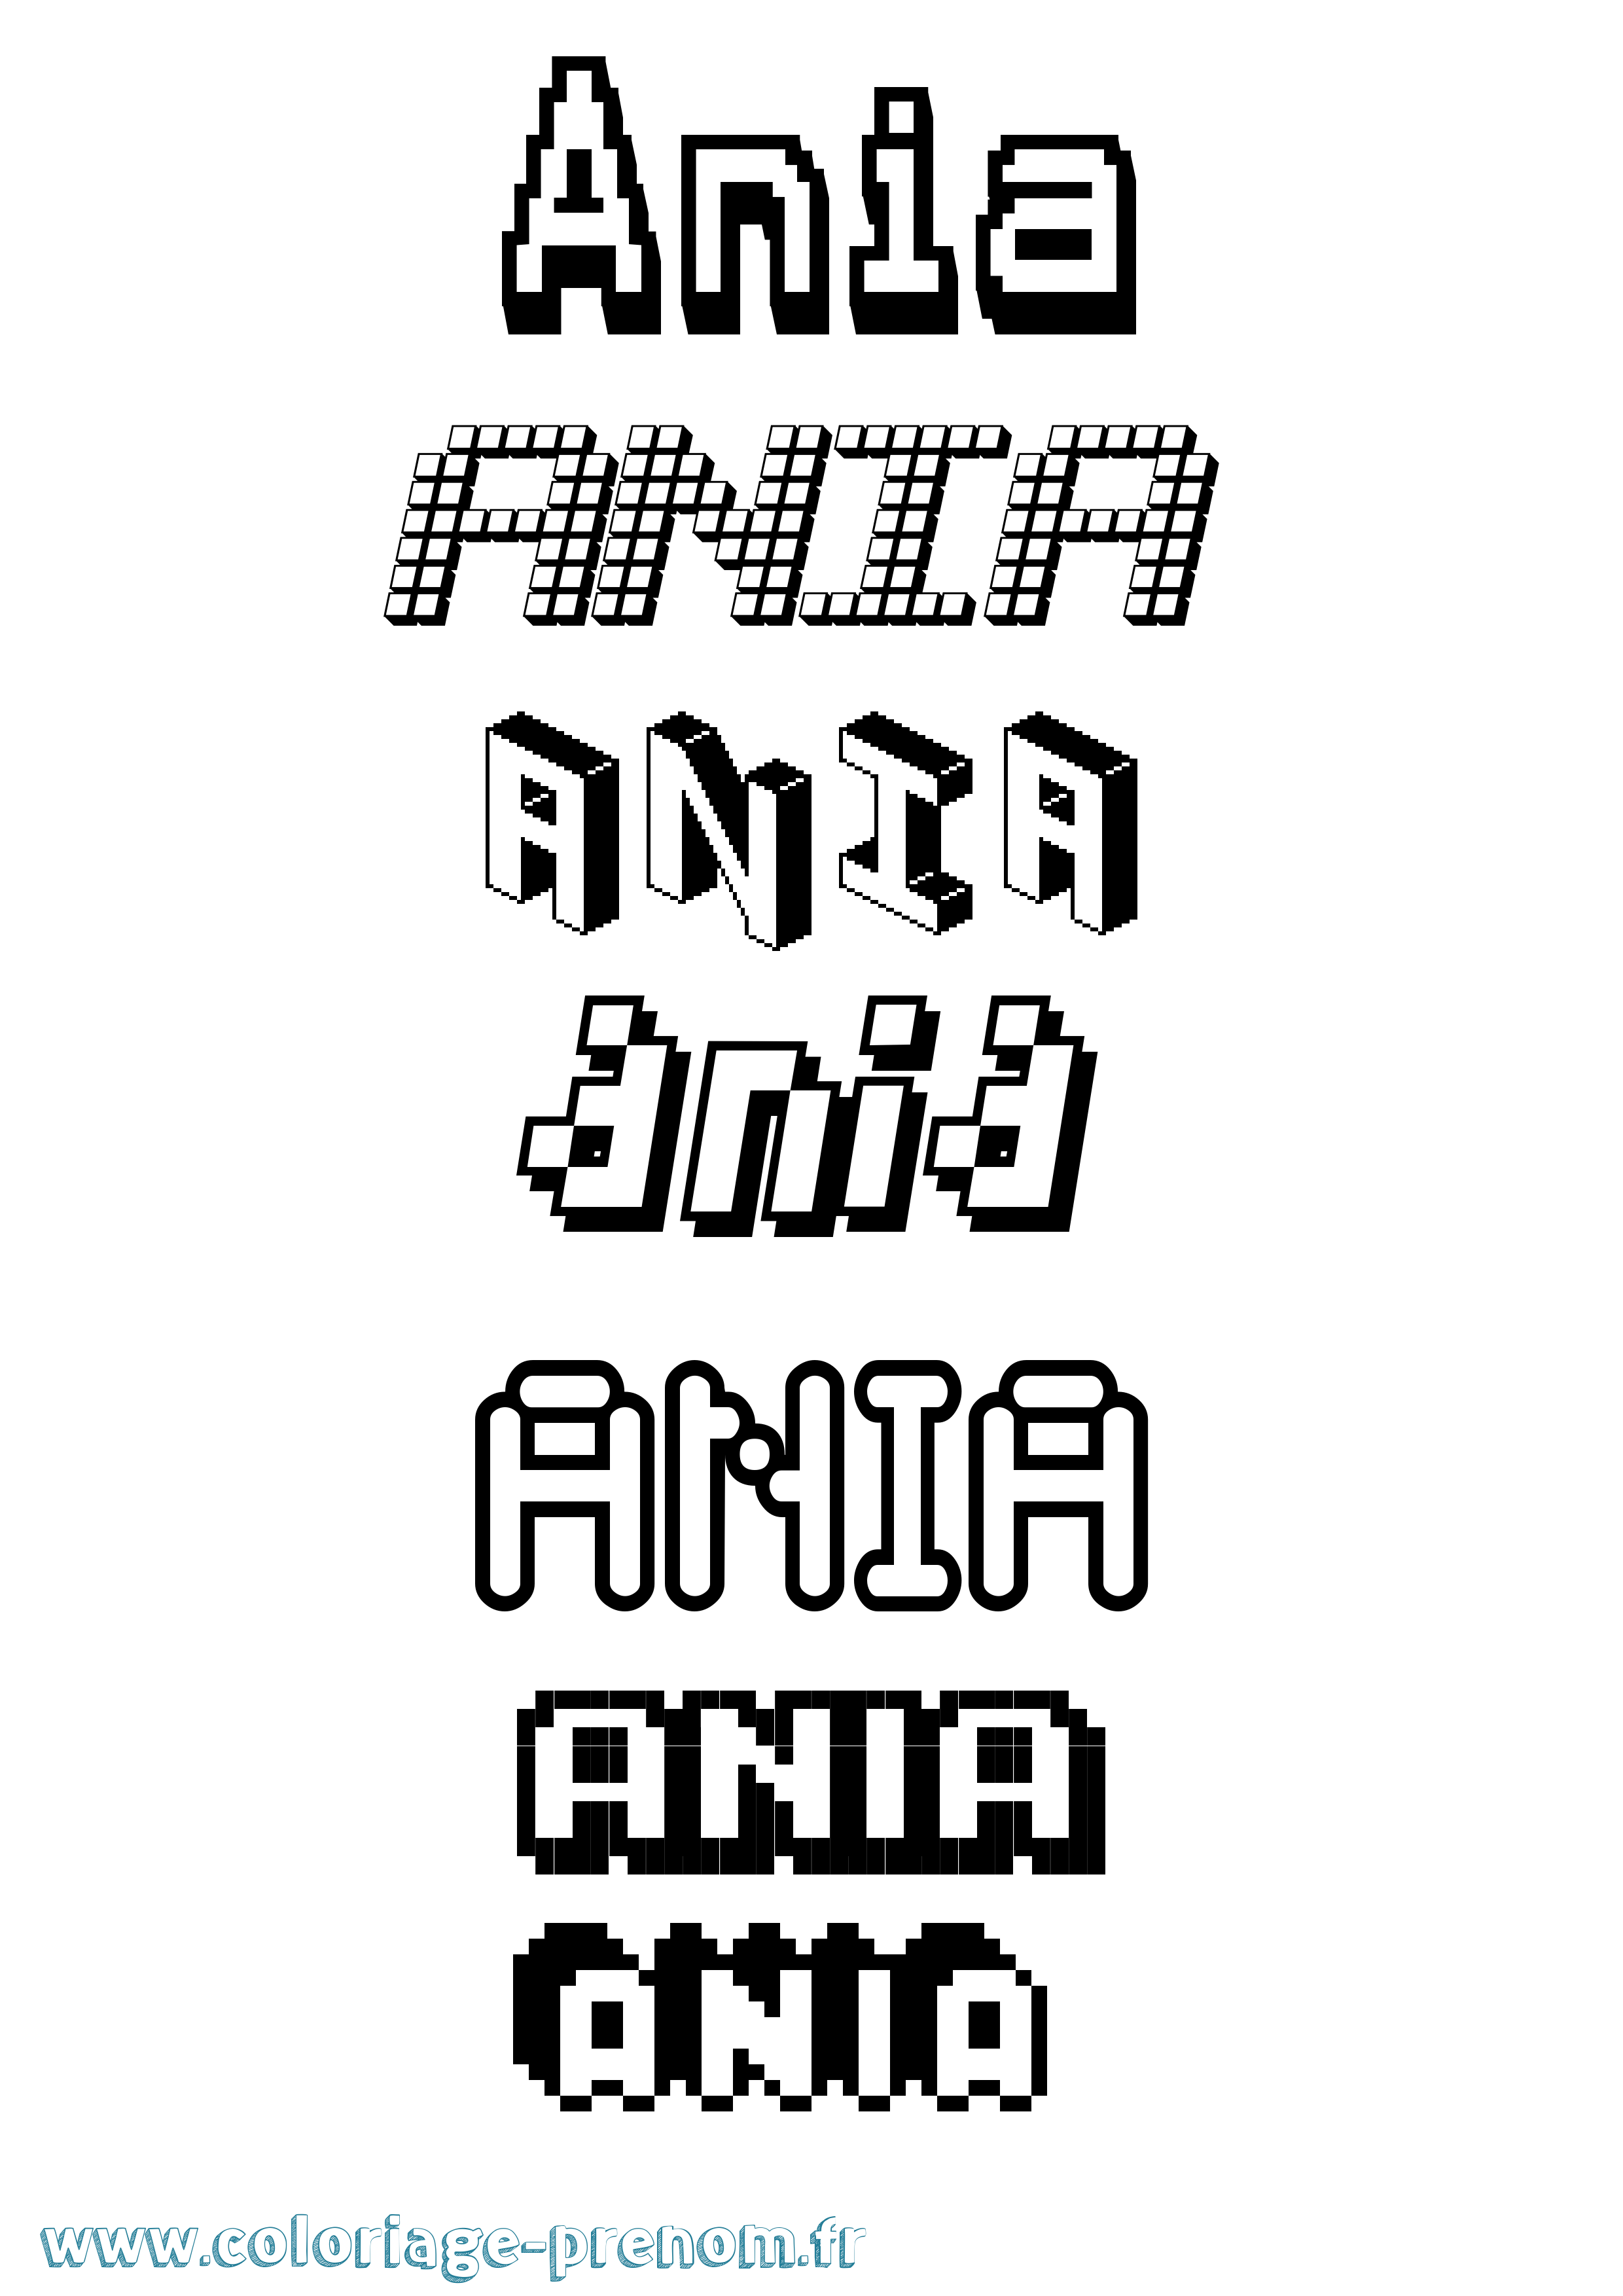 Coloriage prénom Ania Pixel